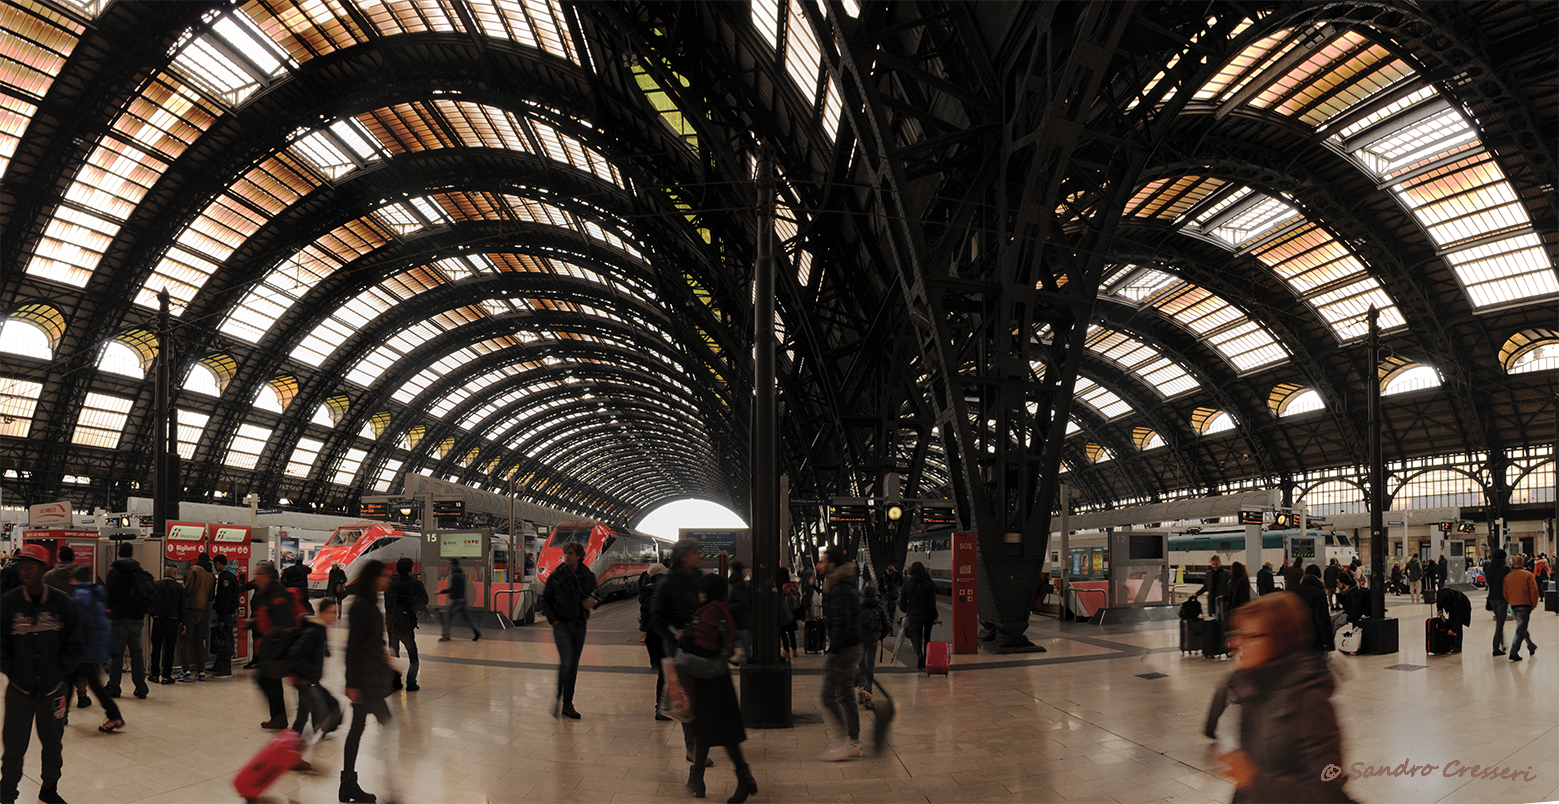 Milan Central Station...